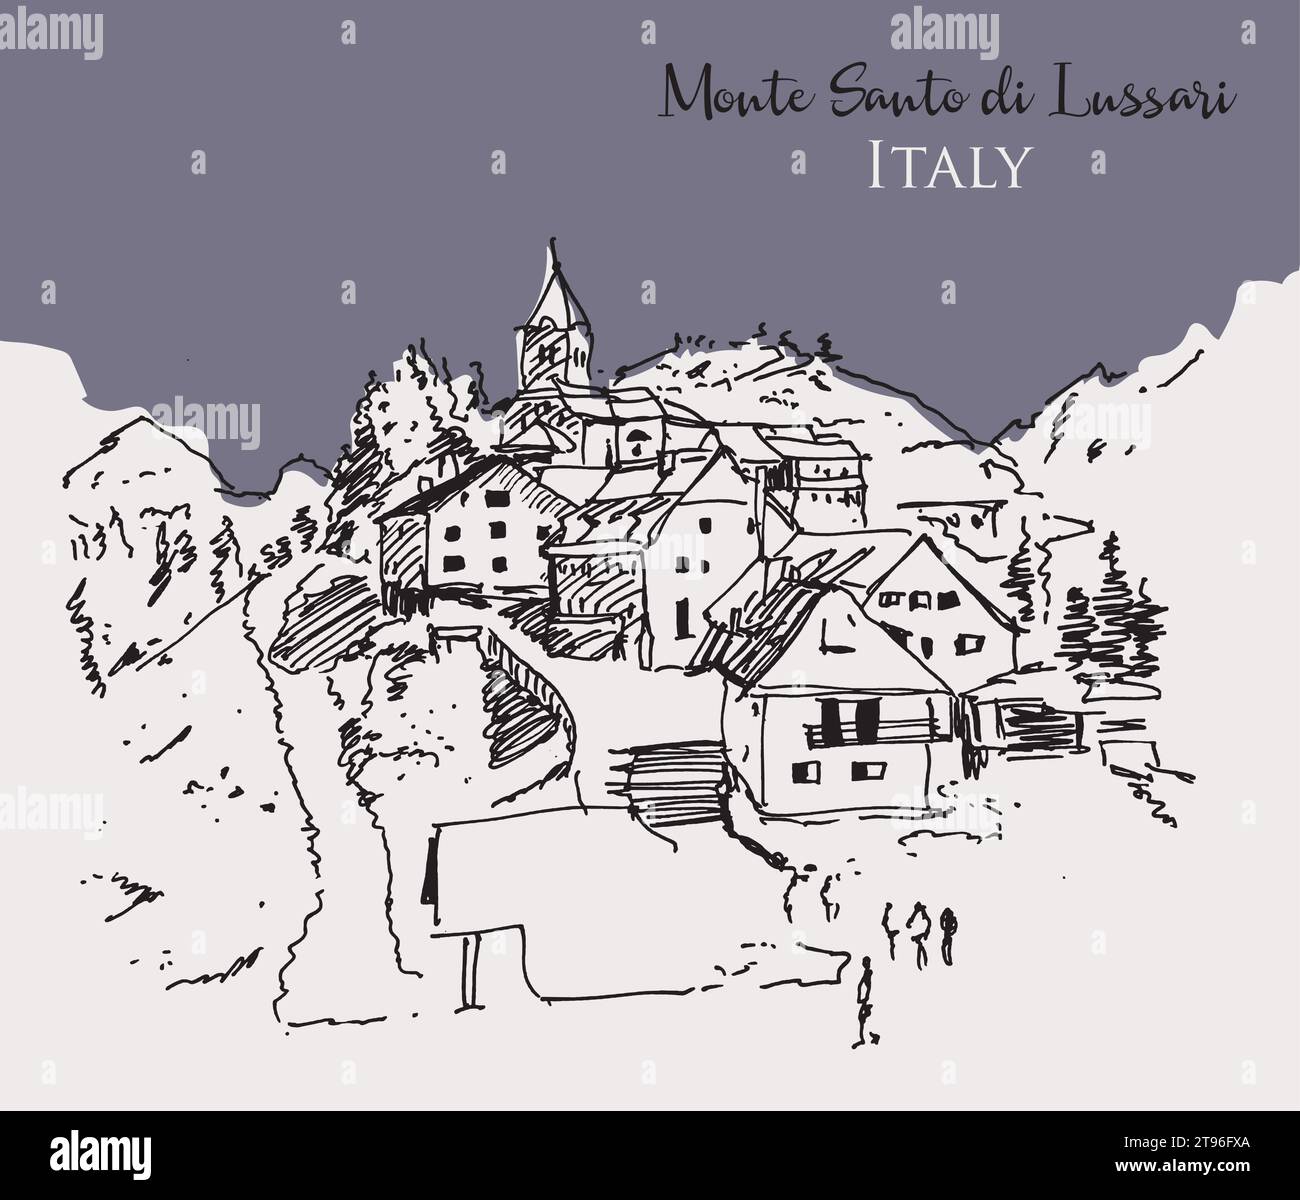 Vector hand drawn sketch illustration of Monte Santo di Lussari, a small ski resort in Northern Italy. Stock Vector